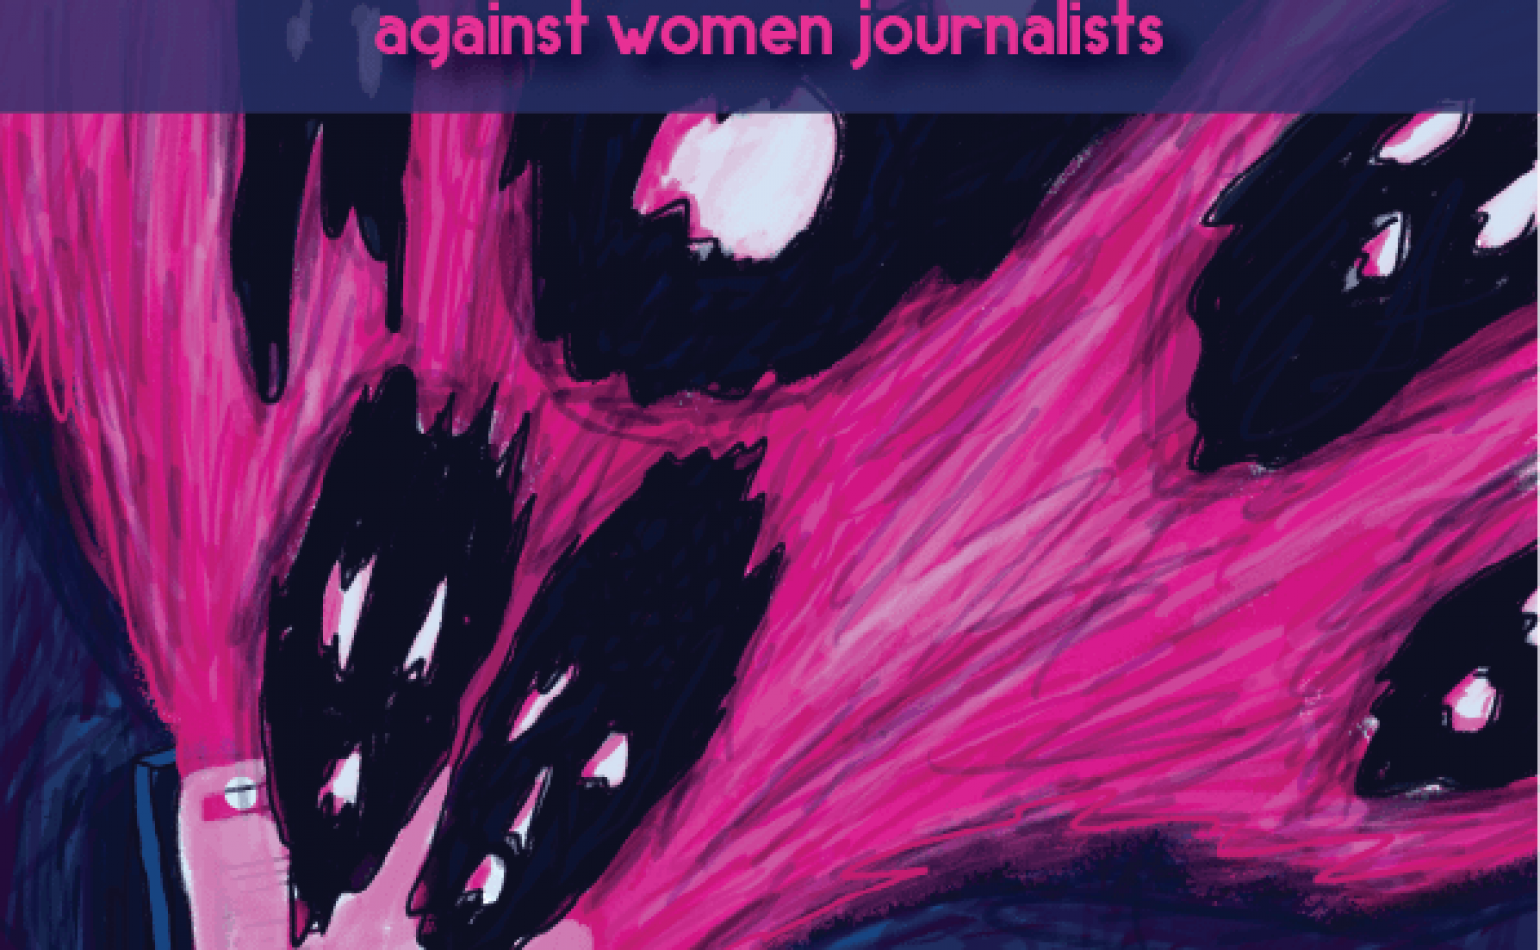 Hostile Bytes: A Study of Online Violence Against Women Journalists